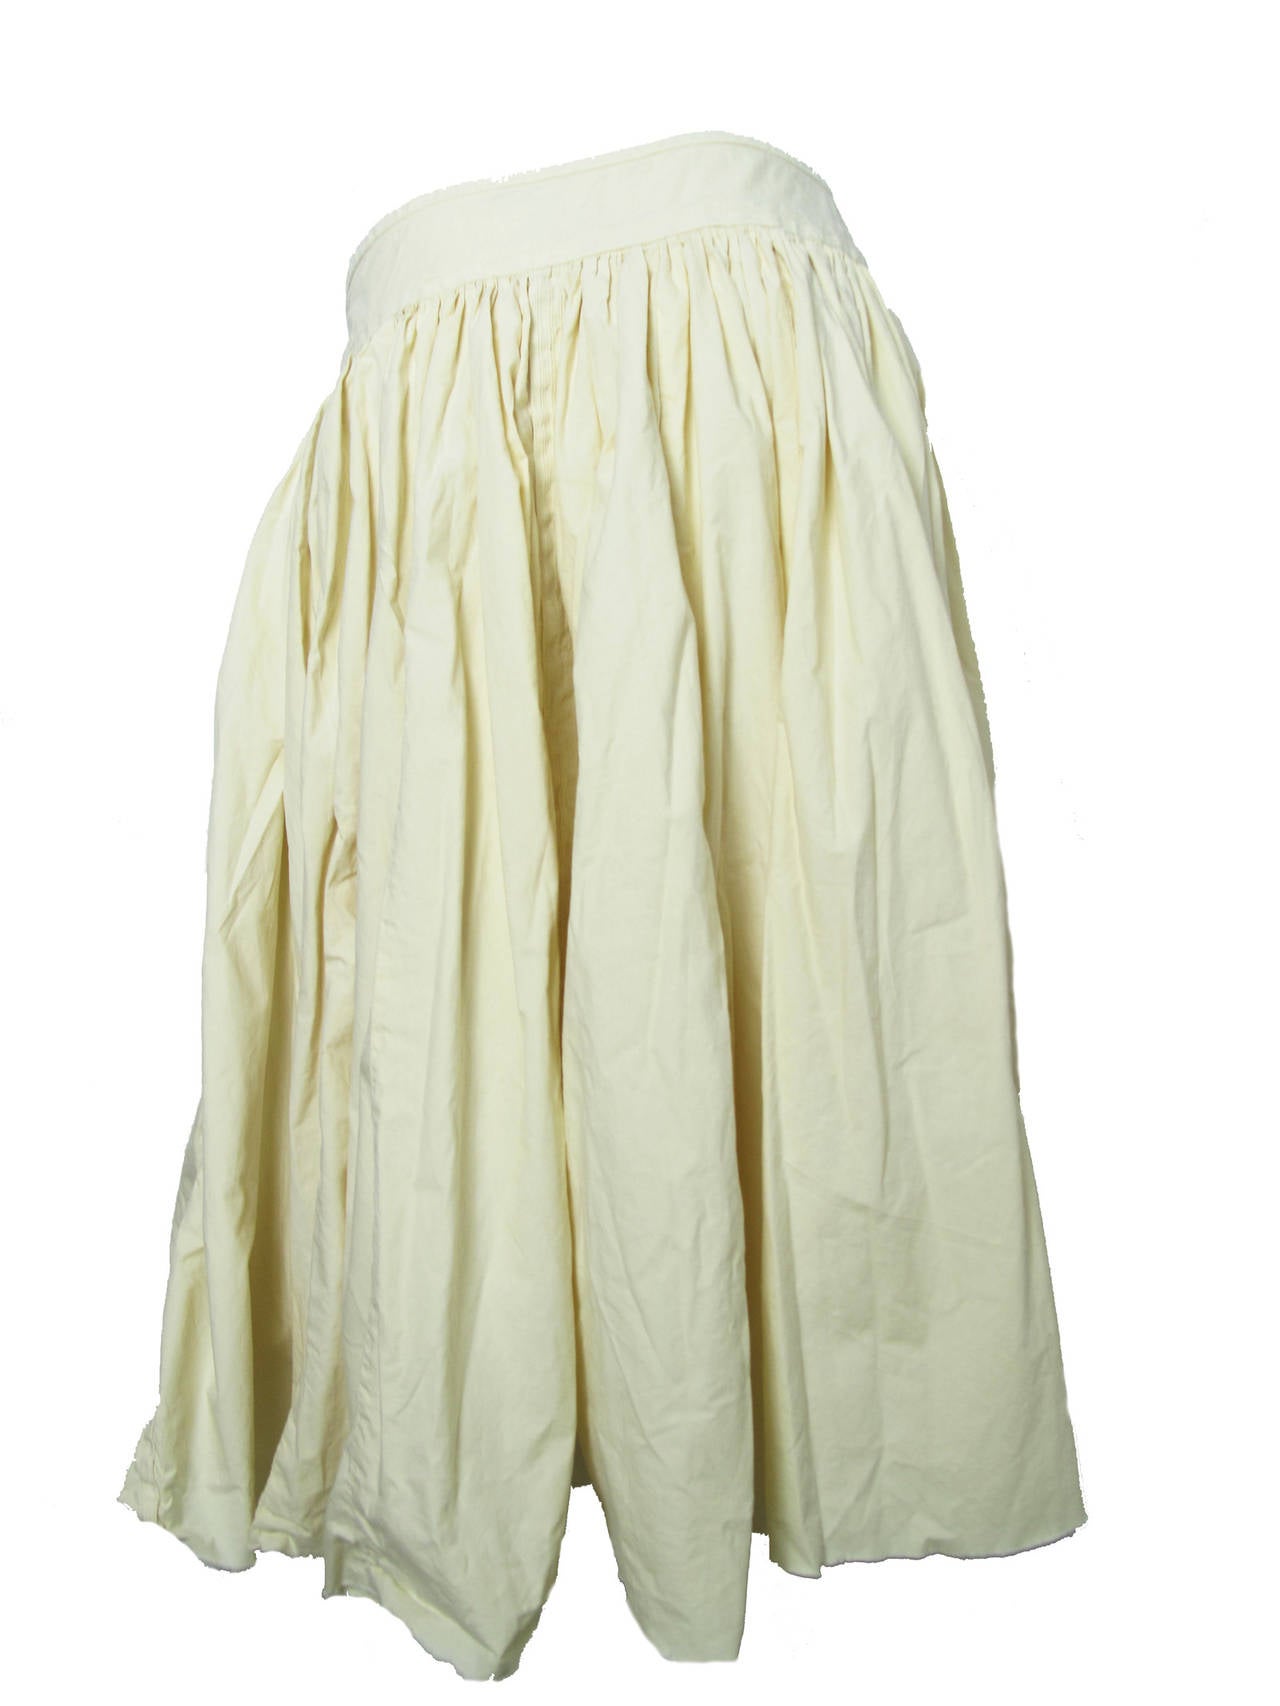 2000 Dries Van Noten off white cotton muslin circle skirt with raw edge.  30